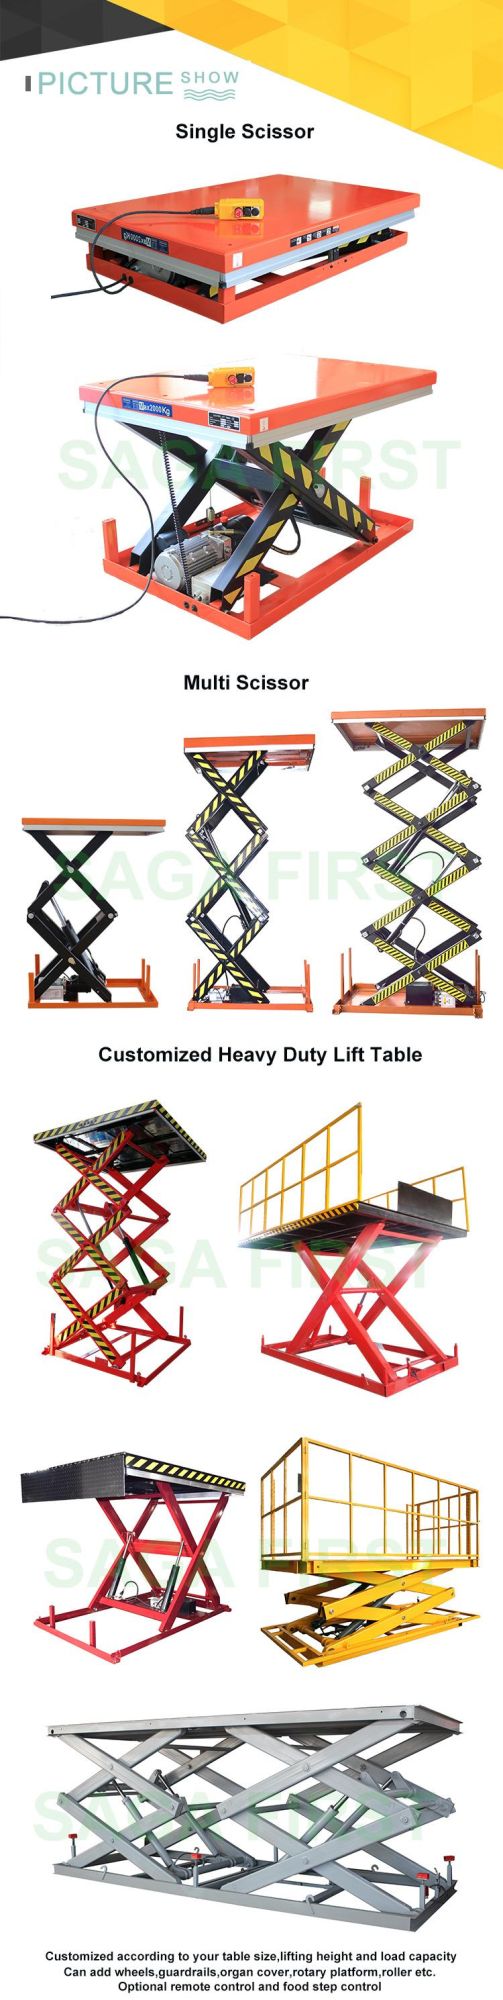 Stationary Hydraulic Lift for Warehouse Scissor Lift Table